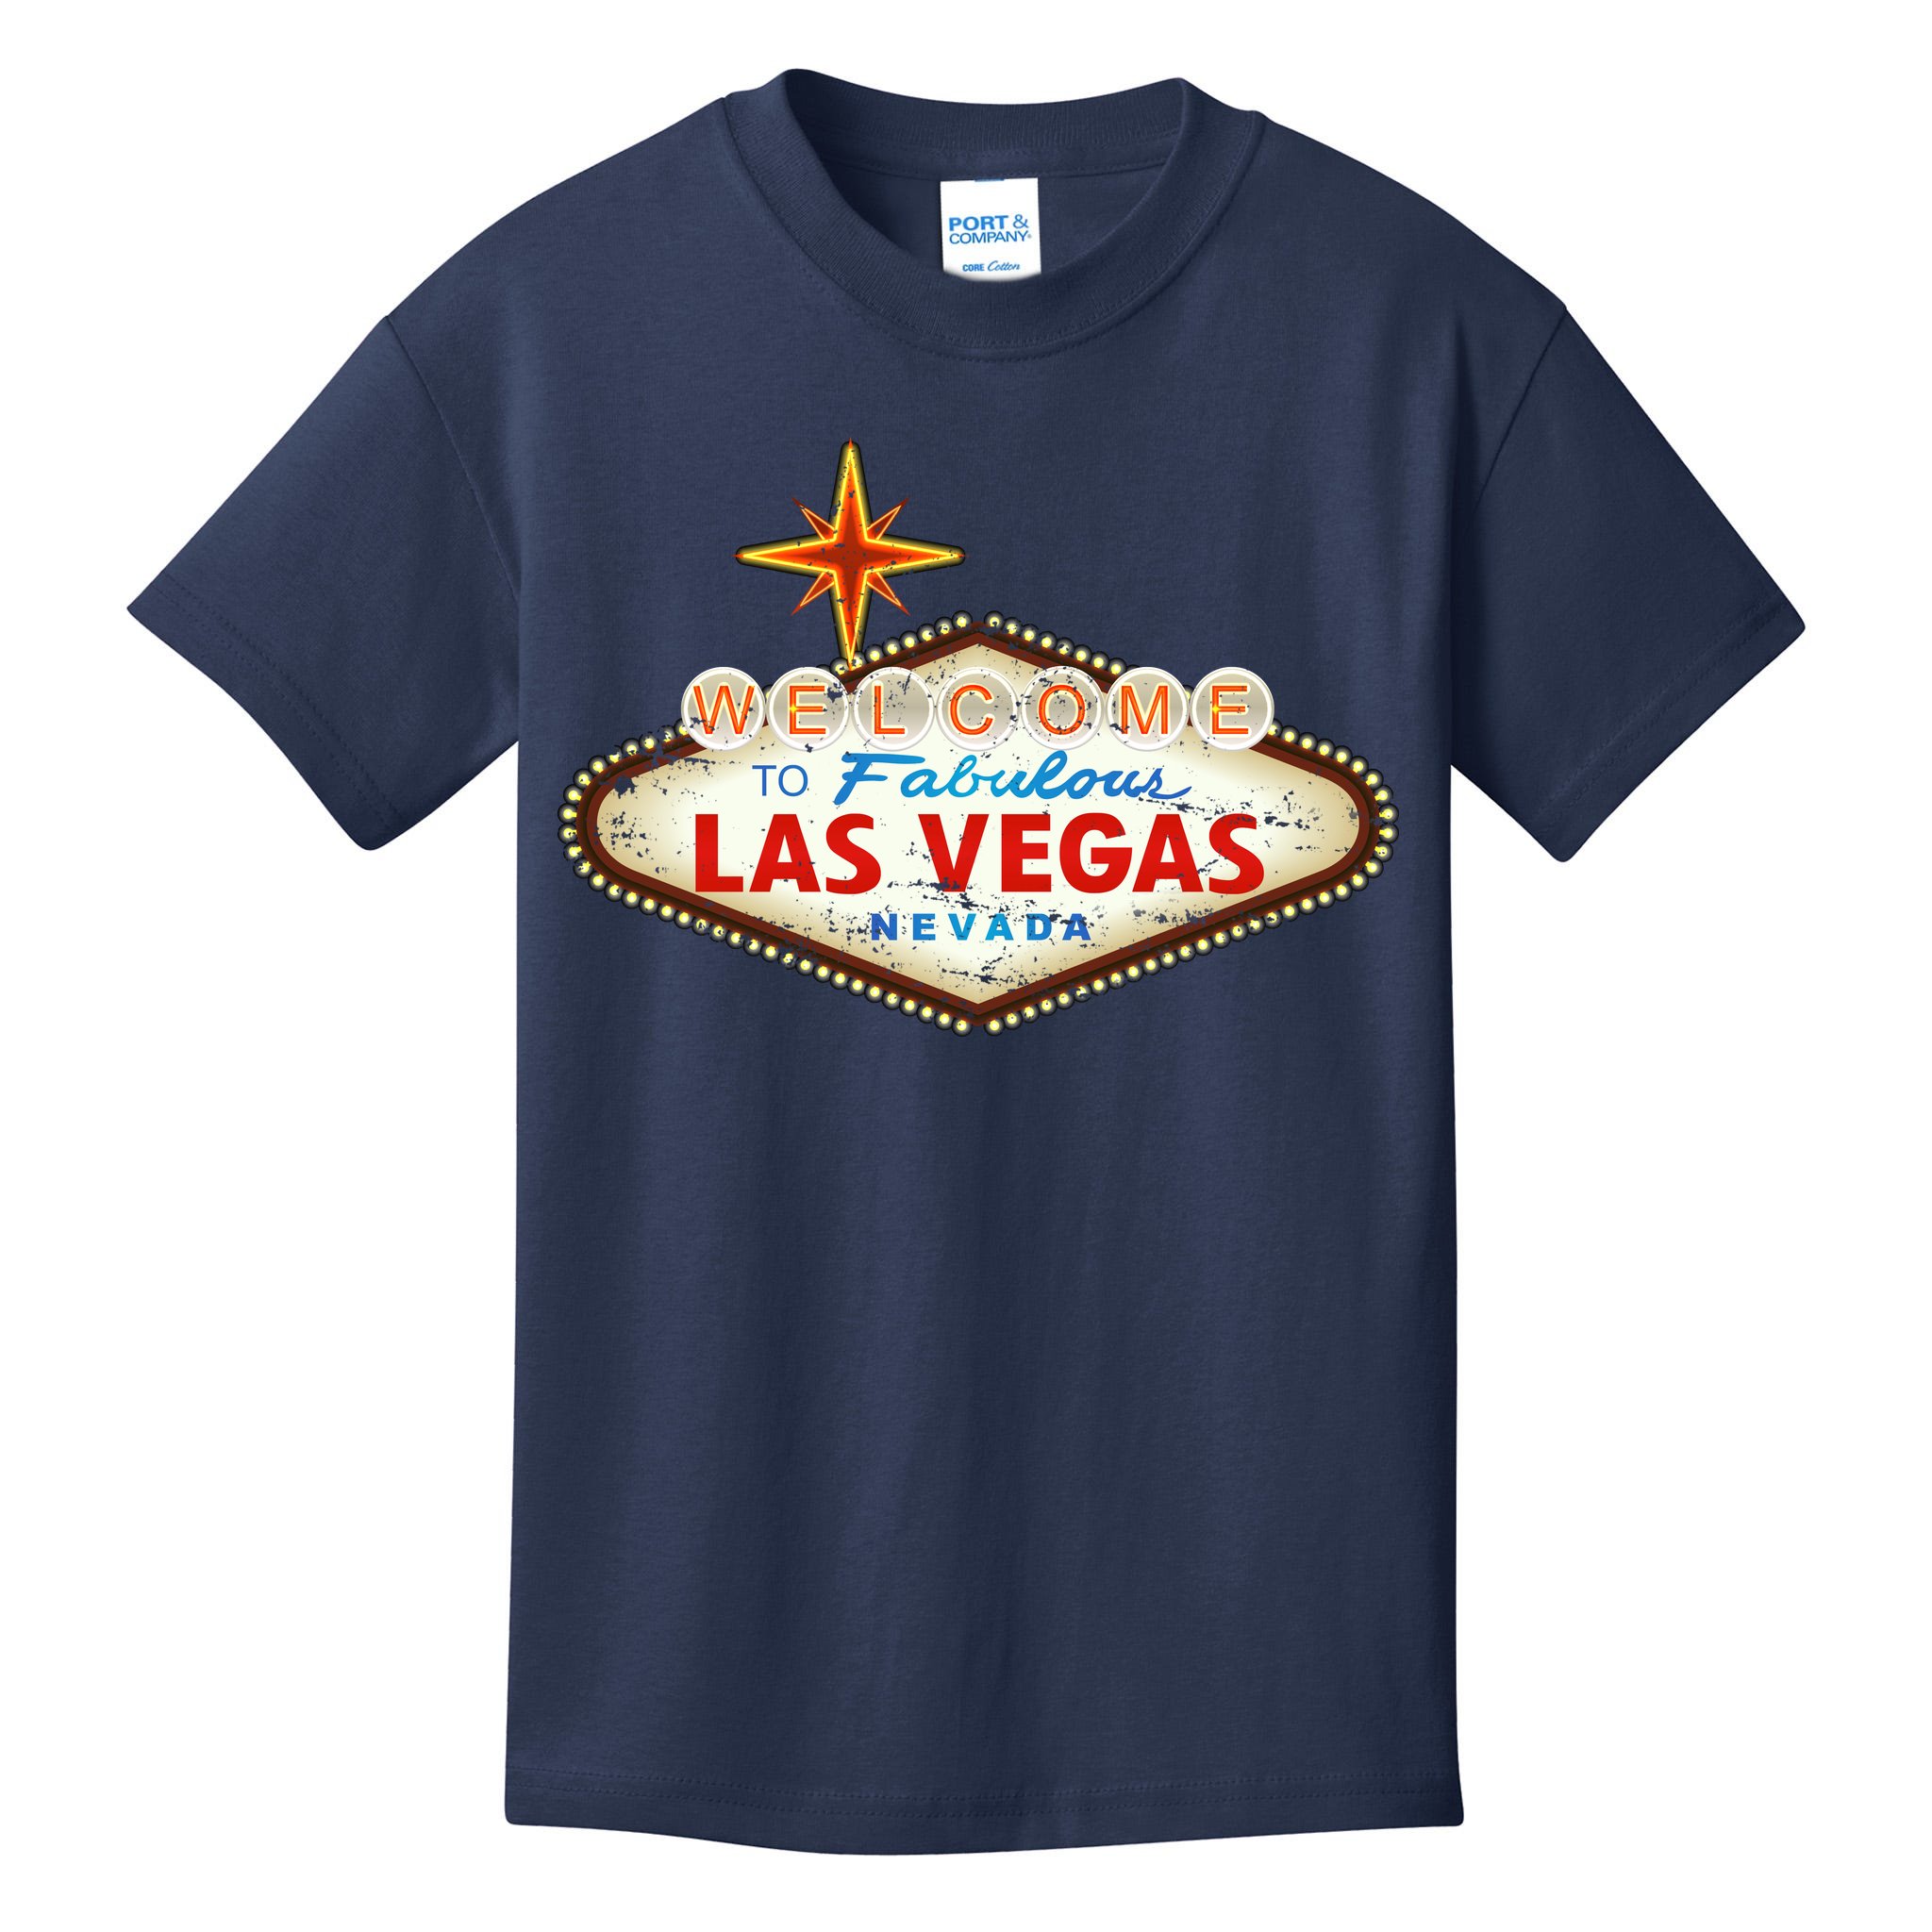  Las Vegas Sweatshirt Las Vegas Welcome to Las Vegas